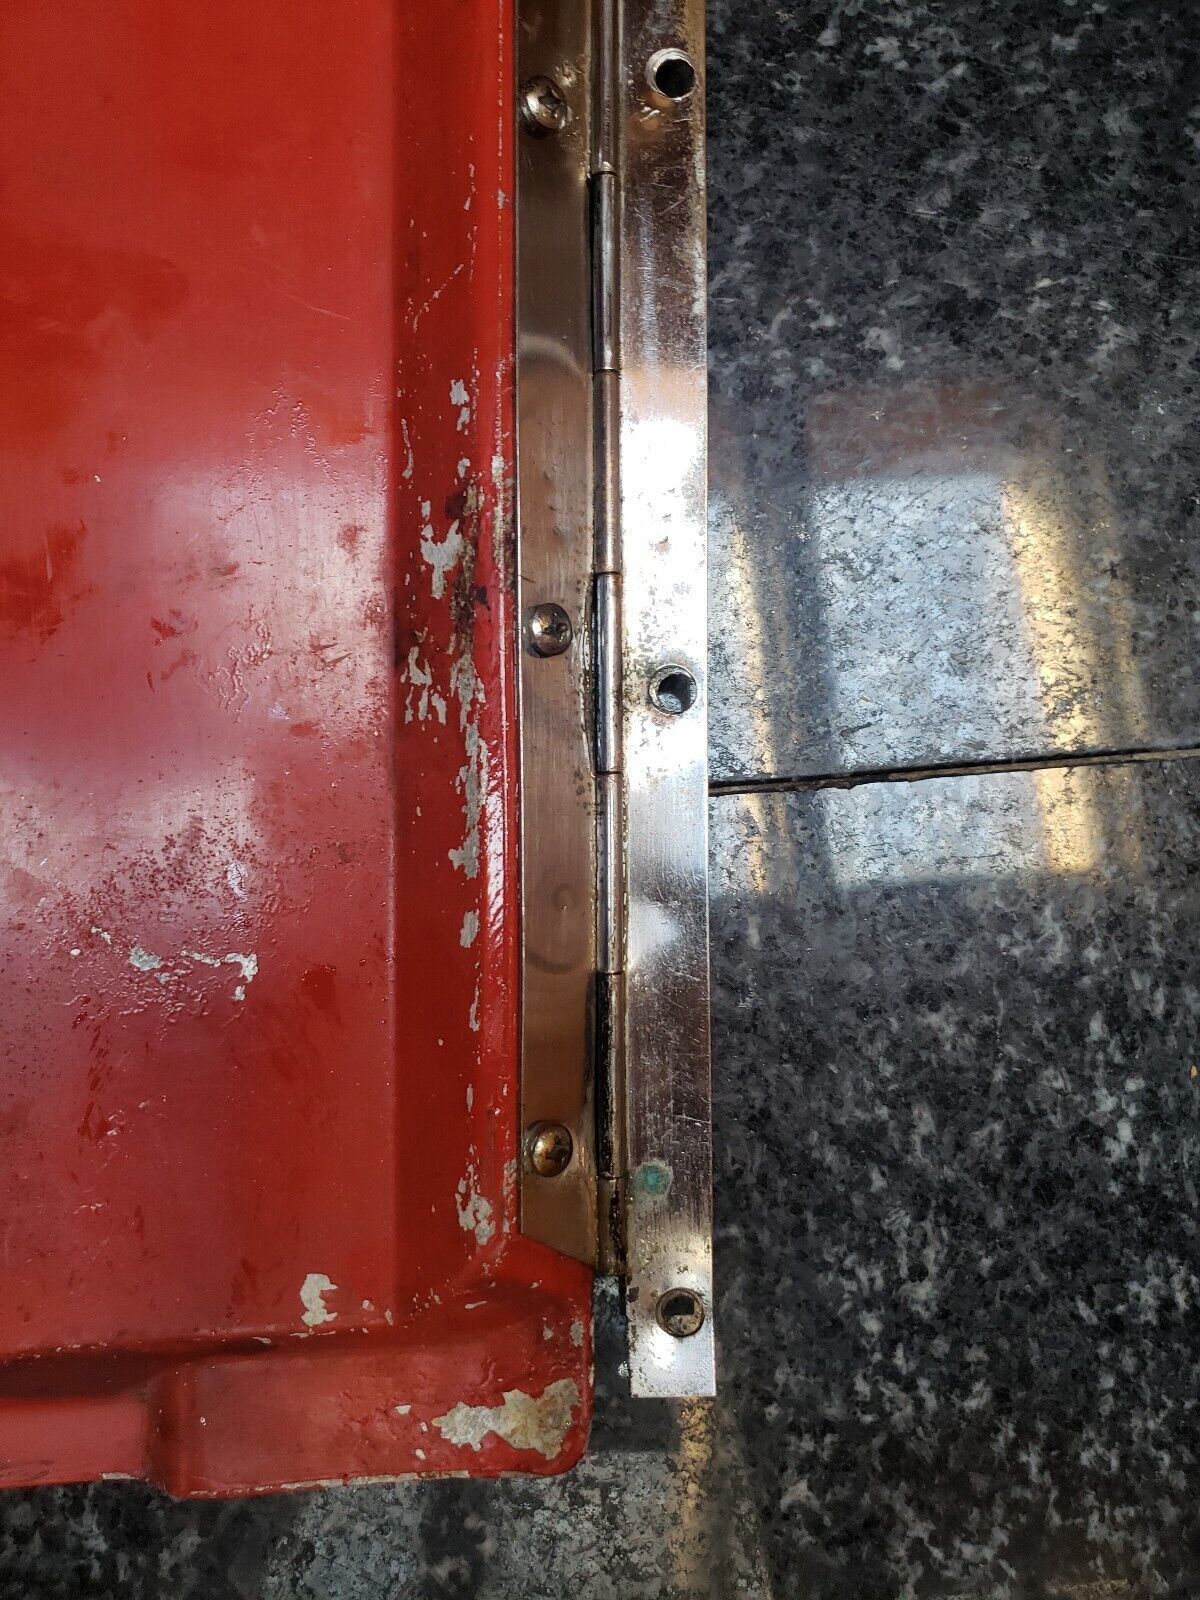 Mercedes 190SL glovebox door handle pull hardware red OEM w121 1955-56 complete